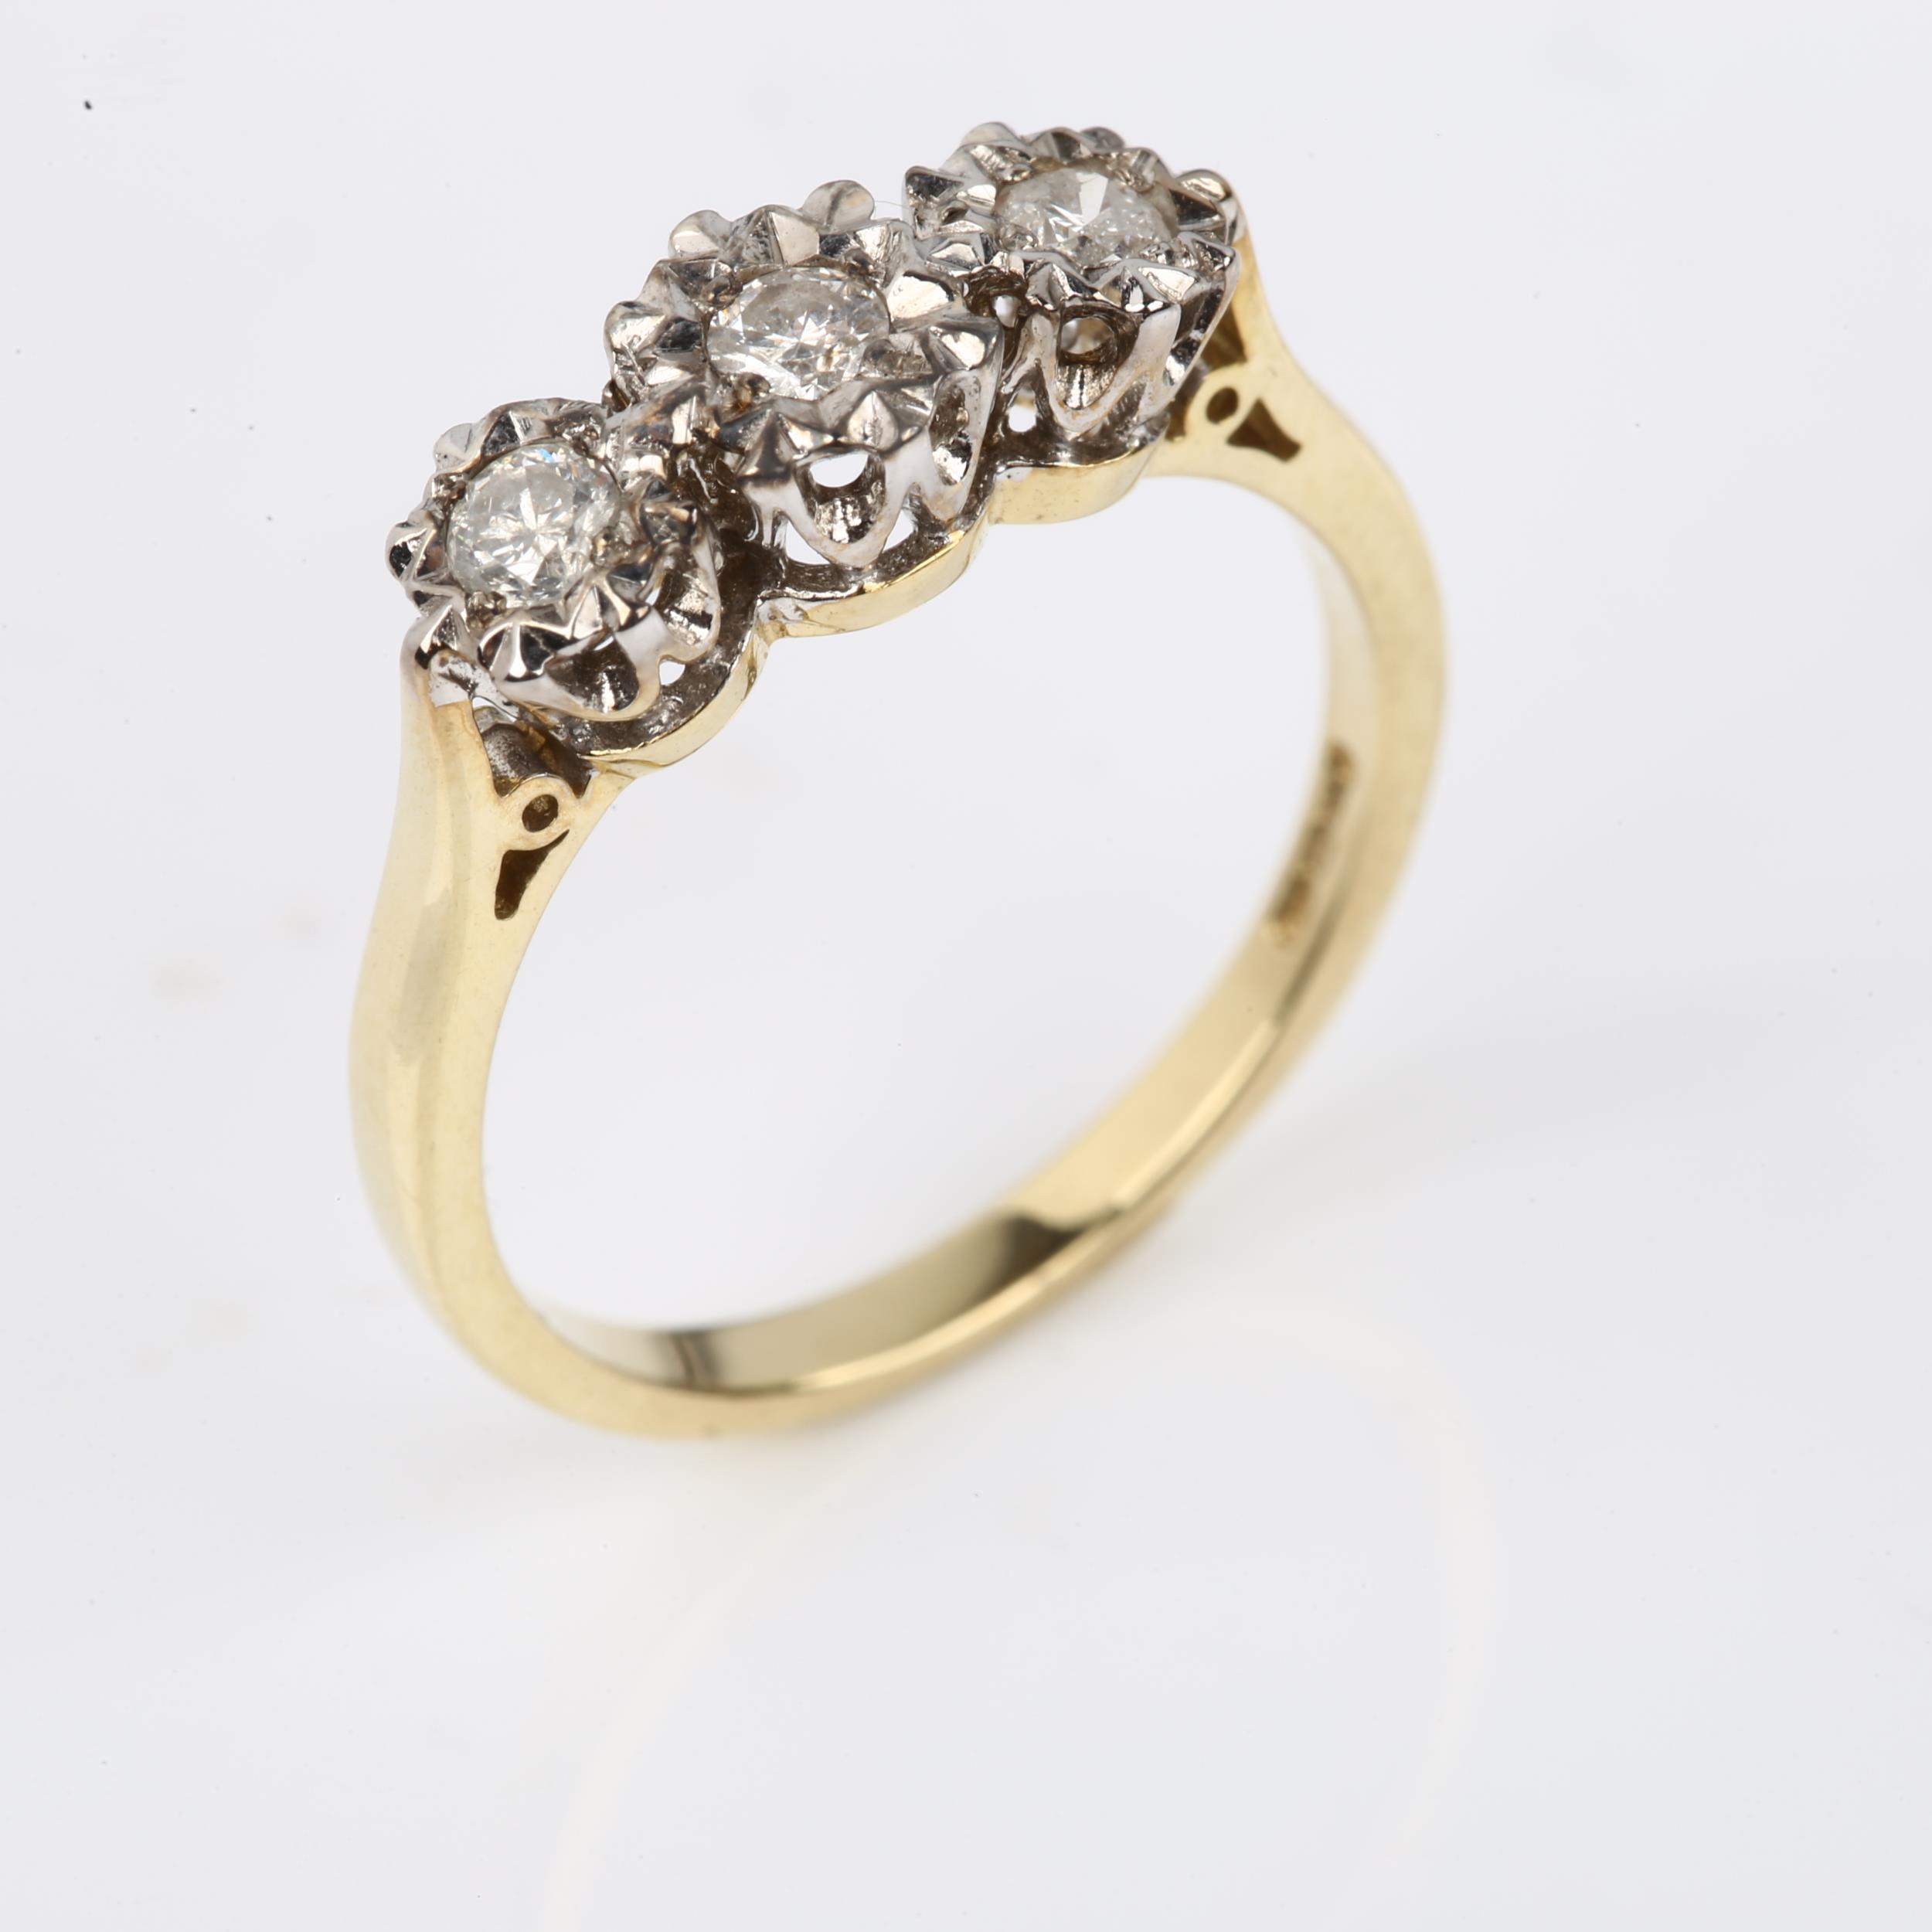 A modern 9ct gold three stone diamond ring, illusion set with modern round brilliant-cut diamonds, - Image 2 of 4